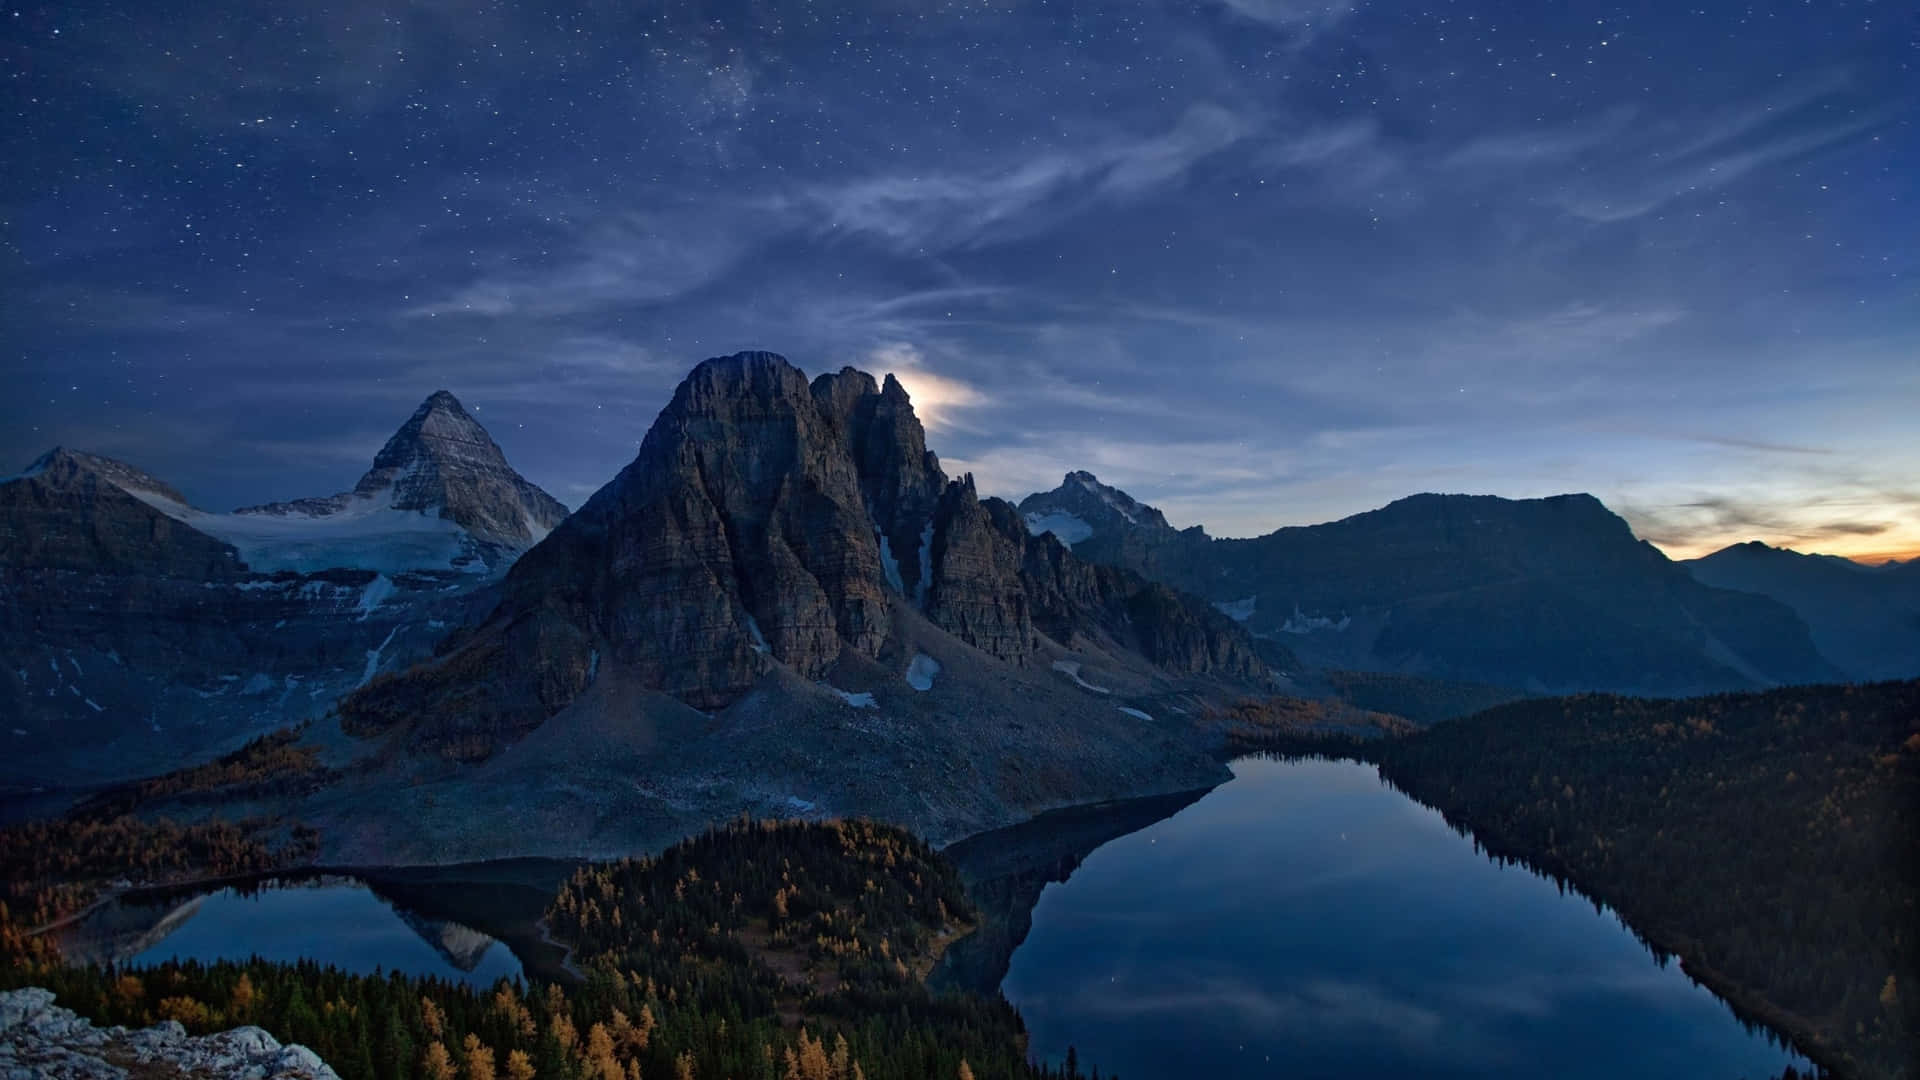 An awe-inspiring view of a snow-capped mountain range Wallpaper